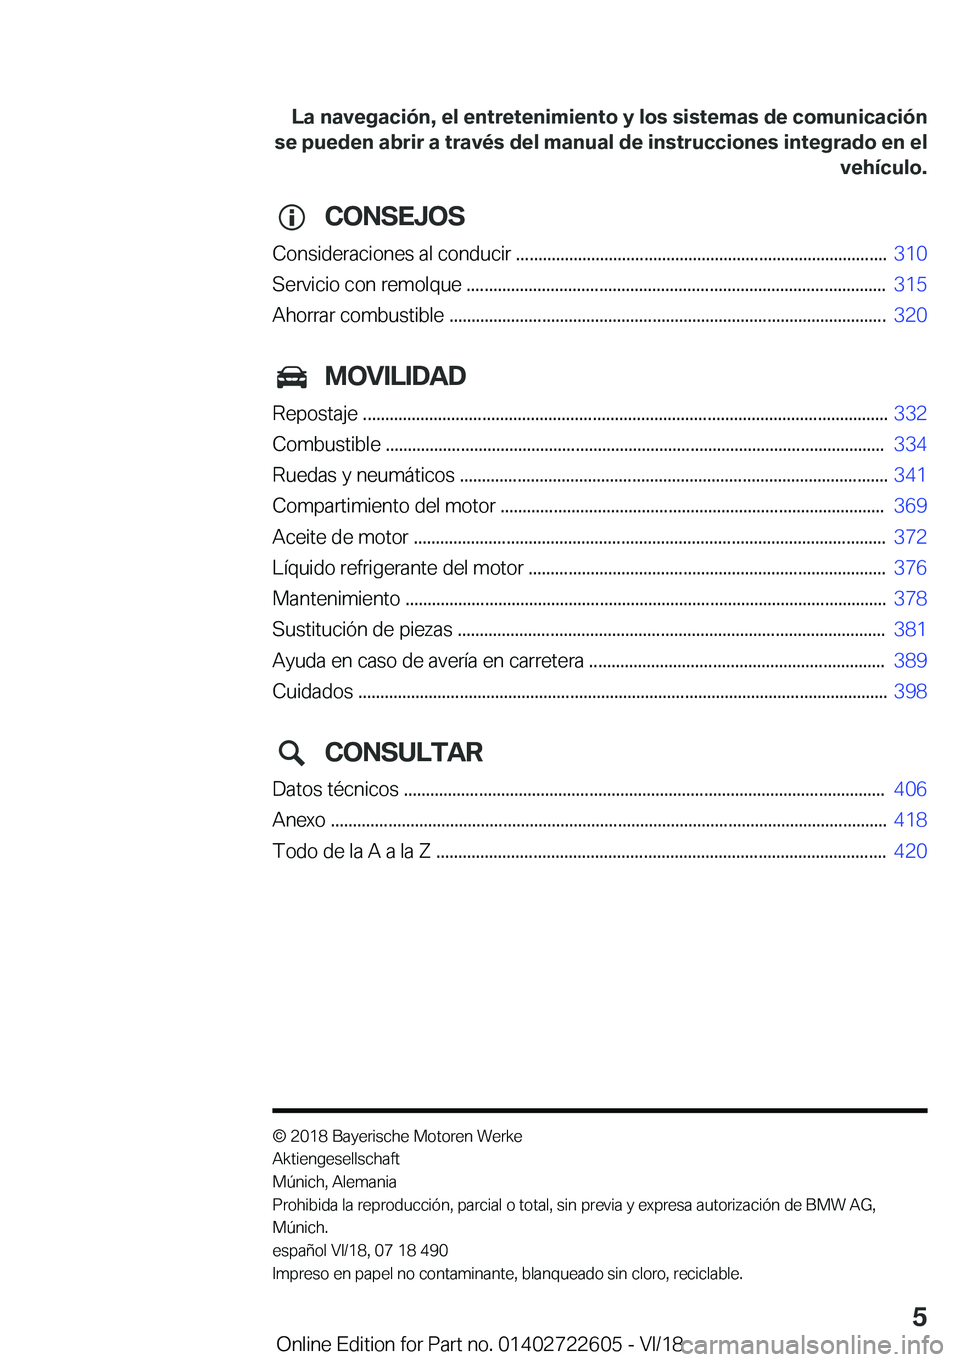 BMW 5 SERIES 2019  Manuales de Empleo (in Spanish) �C�O�N�S�E�J�O�S
�C�o�n�s�i�d�e�r�a�c�i�o�n�e�s��a�l��c�o�n�d�u�c�i�r��.�.�.�.�.�.�.�.�.�.�.�.�.�.�.�.�.�.�.�.�.�.�.�.�.�.�.�.�.�.�.�.�.�.�.�.�.�.�.�.�.�.�.�.�.�.�.�.�.�.�.�.�.�.�.�.�.�.�.�.�.�.�.�